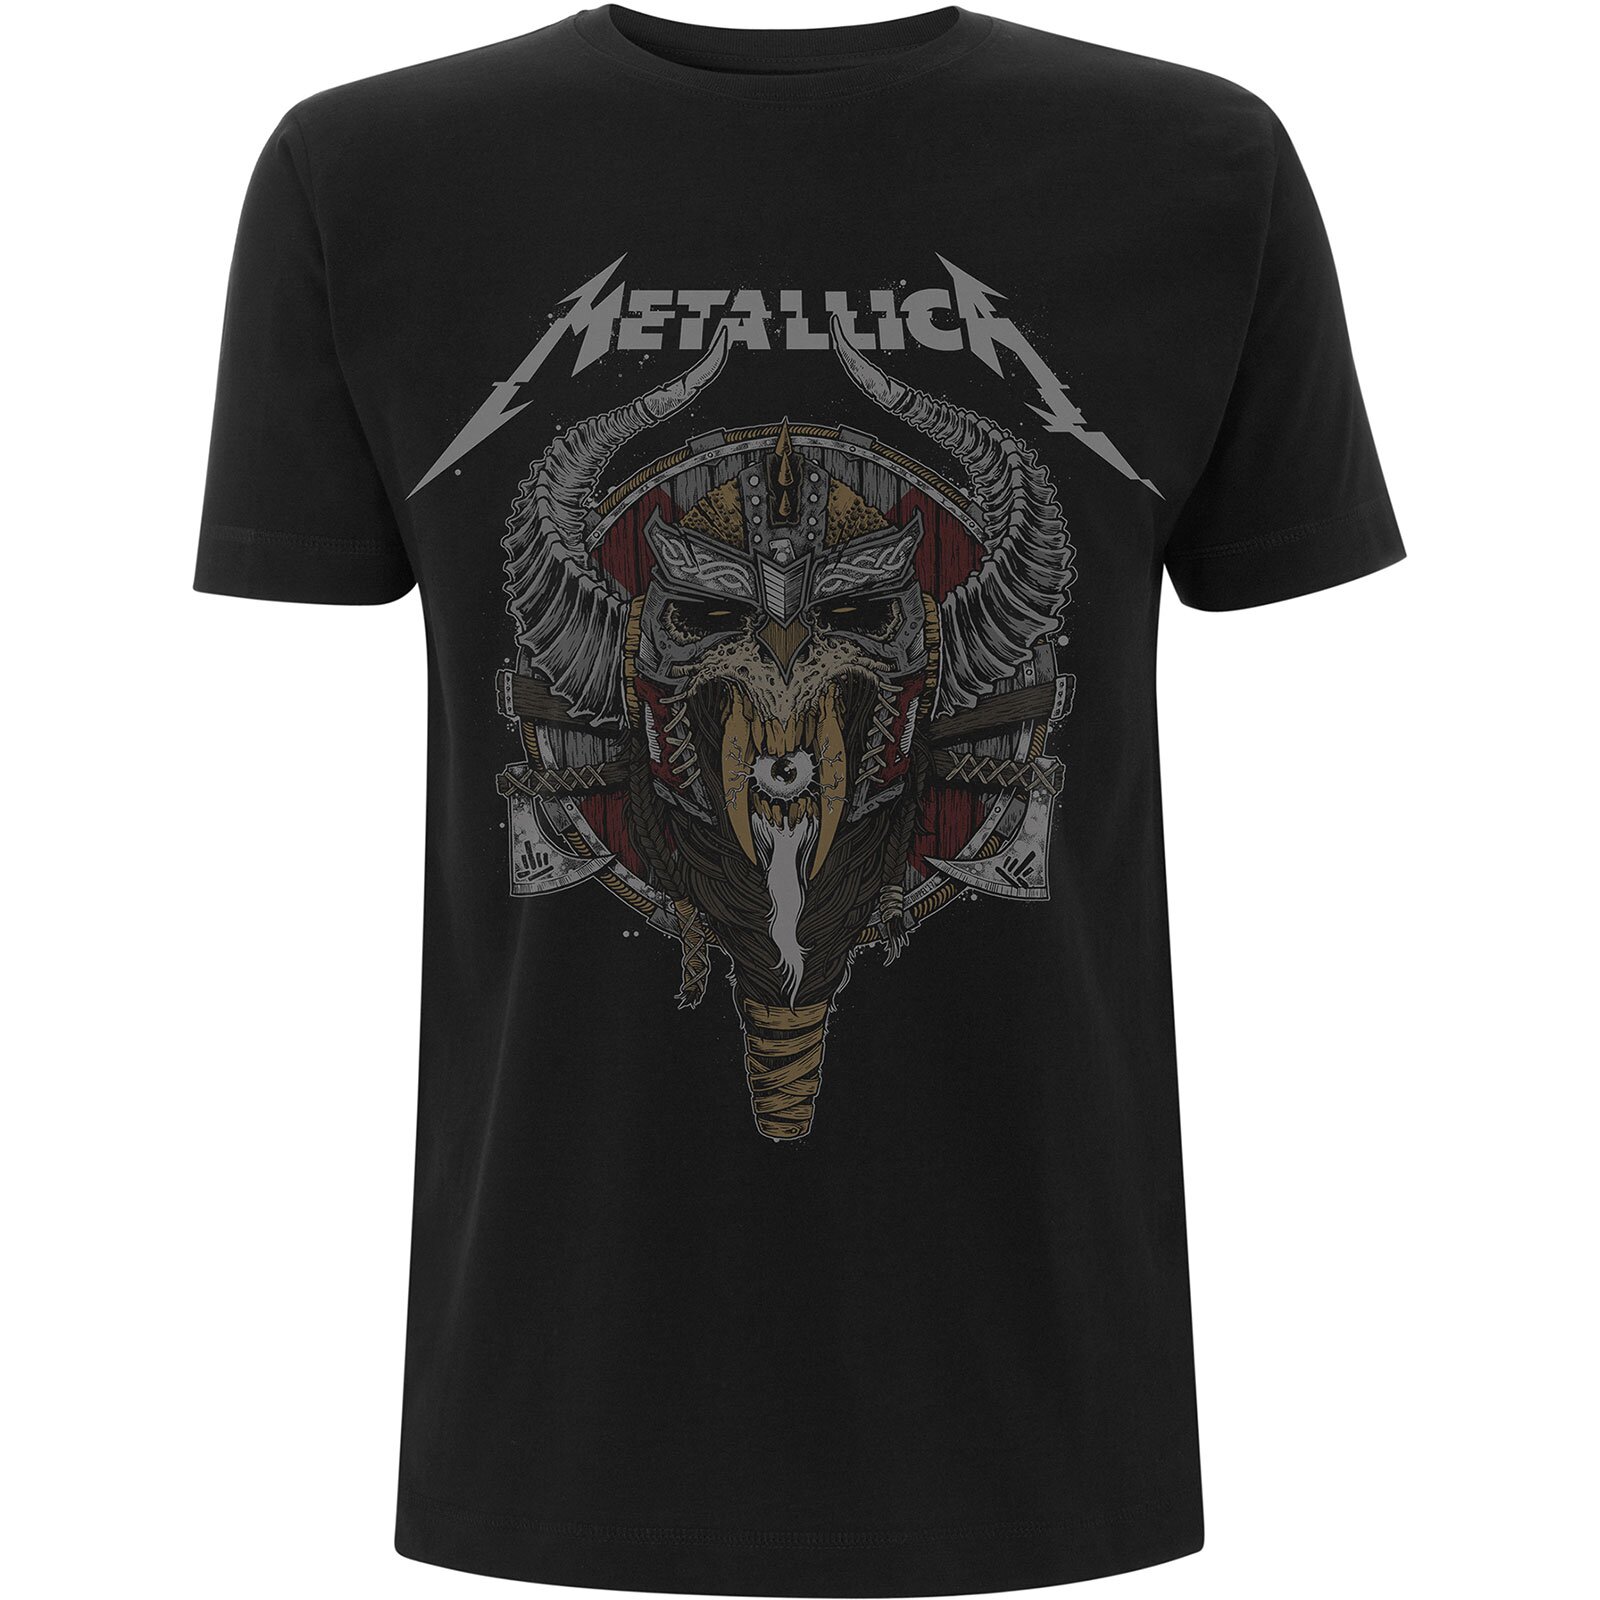 Rockoff T-Shirt Metallica Viking Taille XL : photo 1